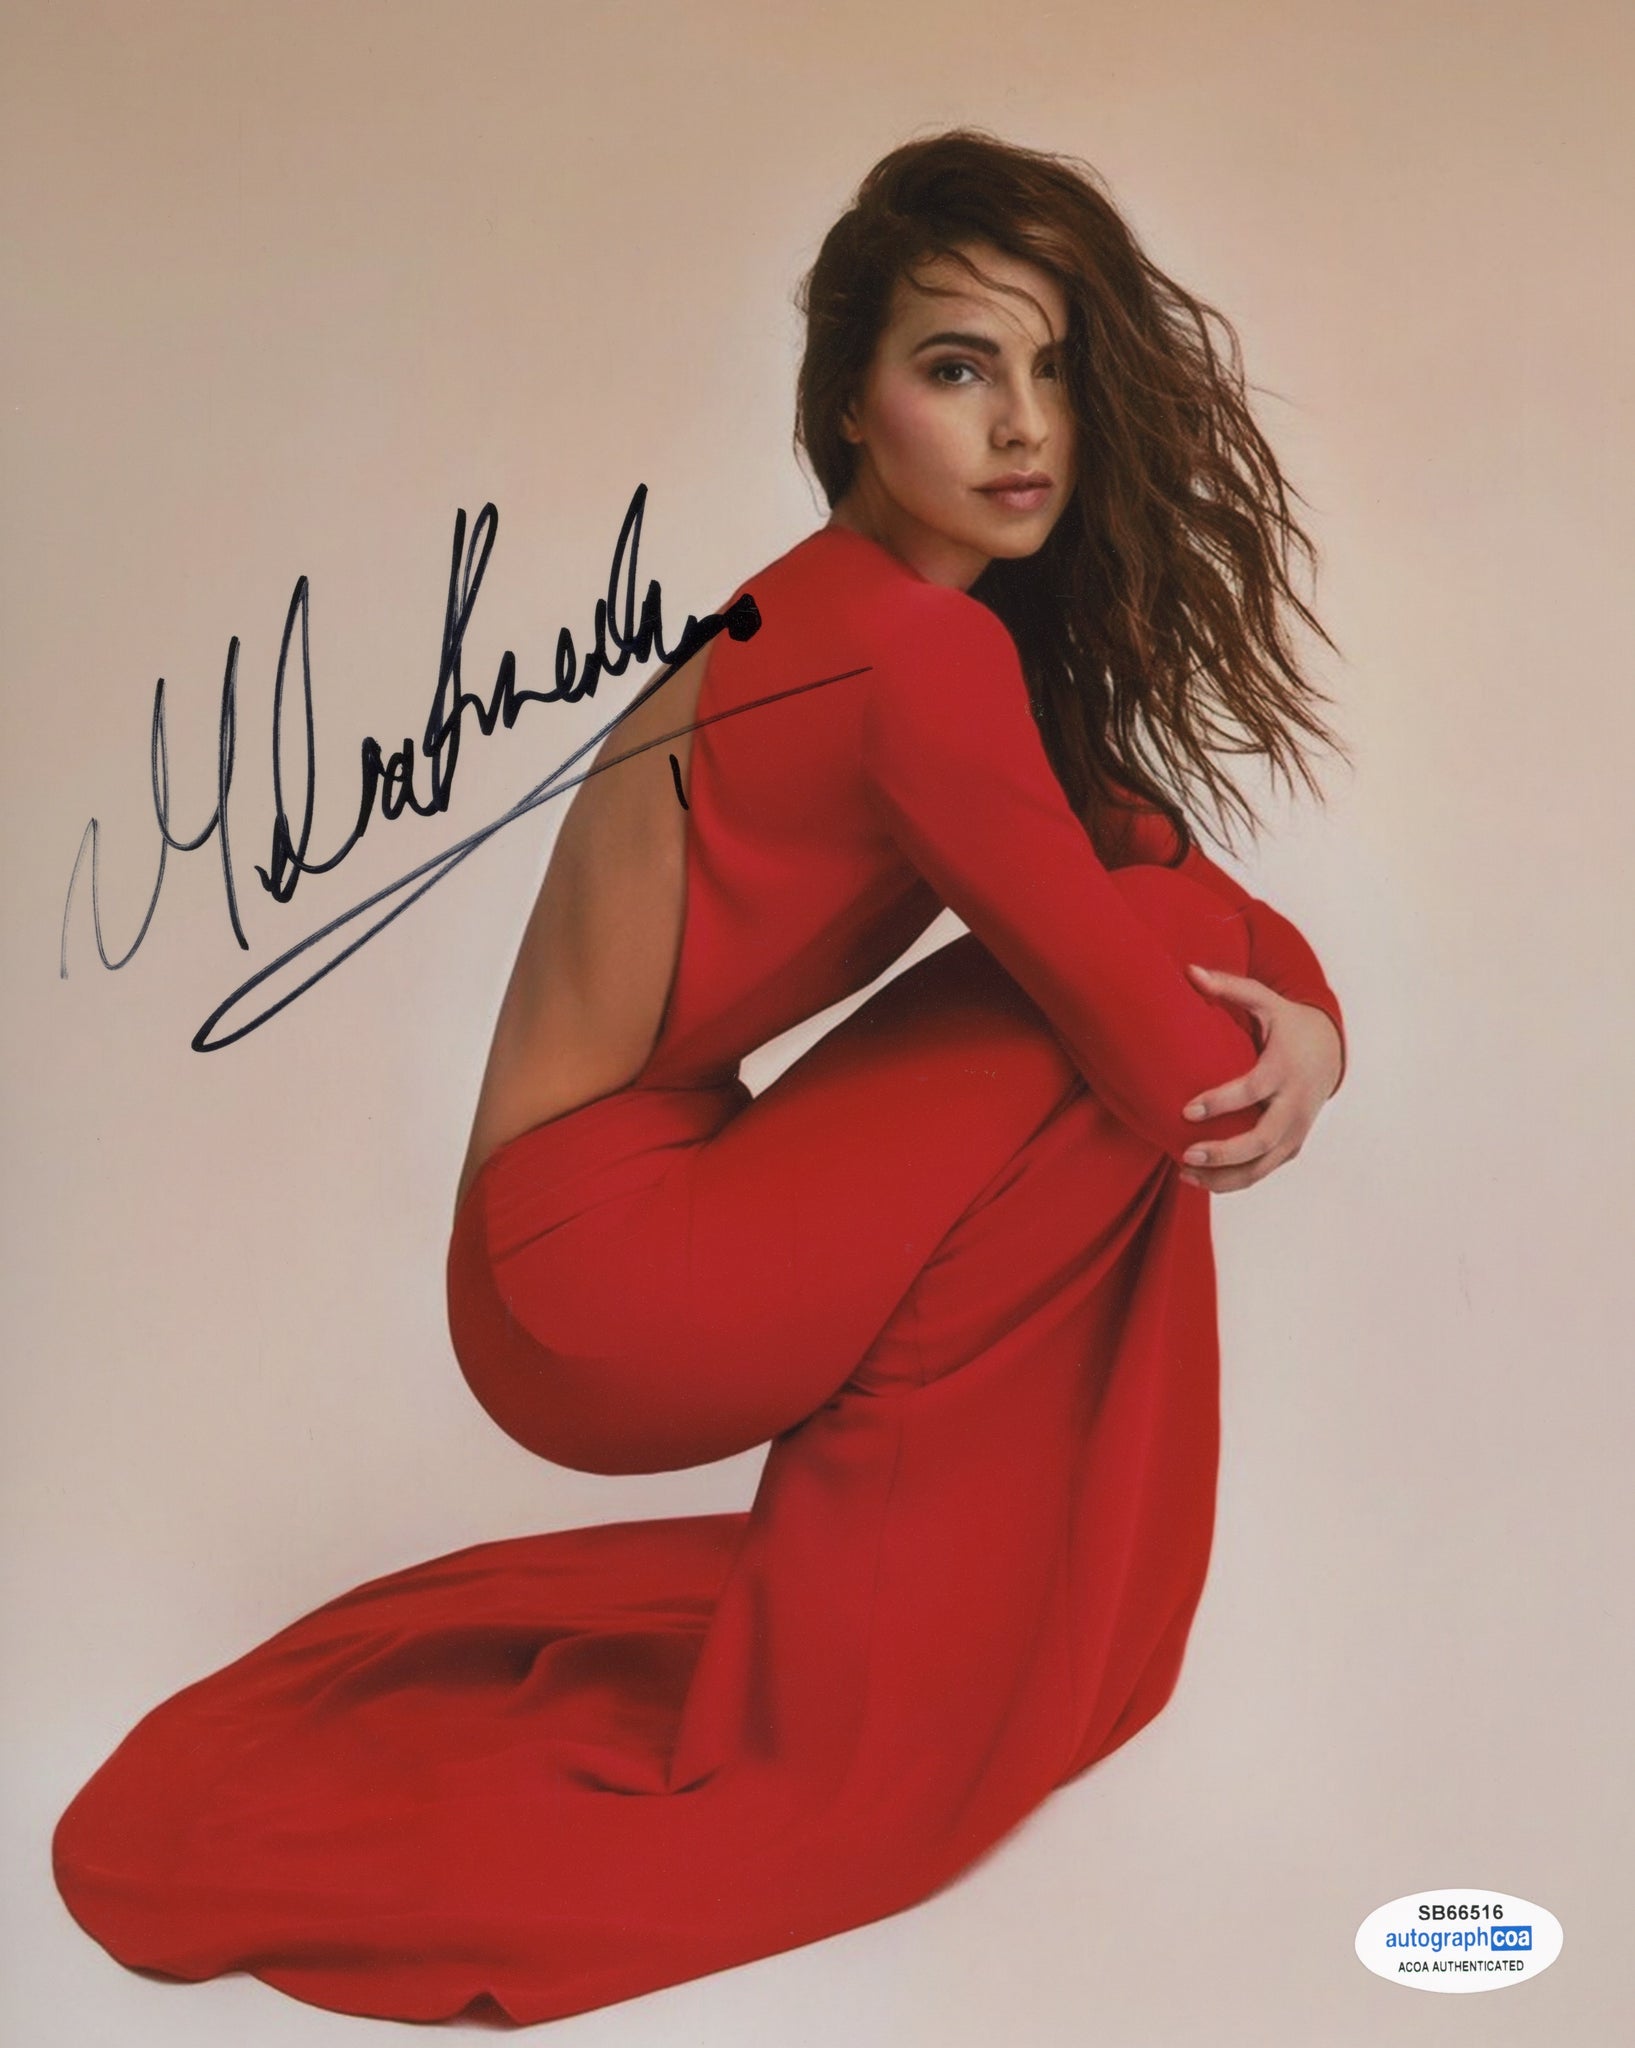 Melia Kreiling Sexy Signed Autograph 8x10 Photo ACOA